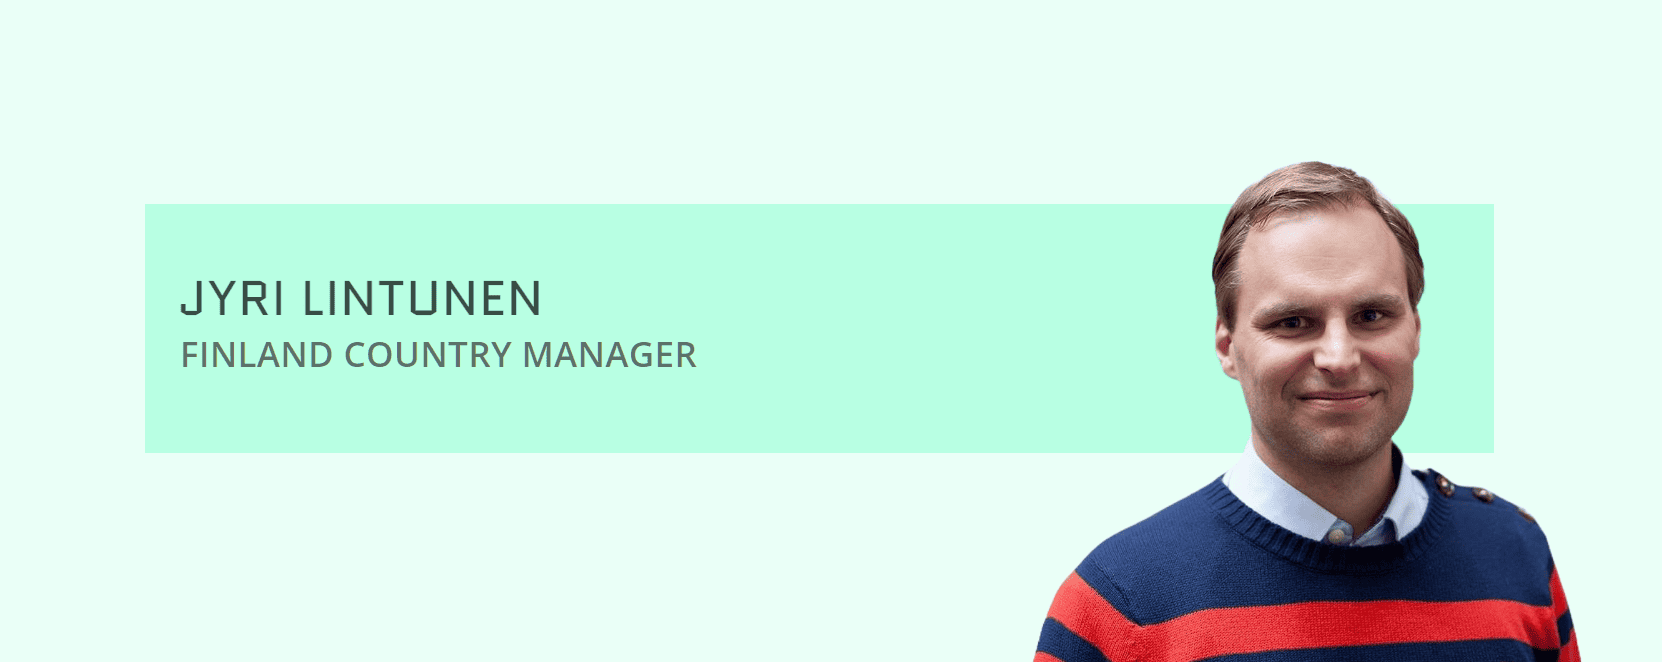 Meet Jyri Lintunen – Finland Country Manager and Senior Advisor!